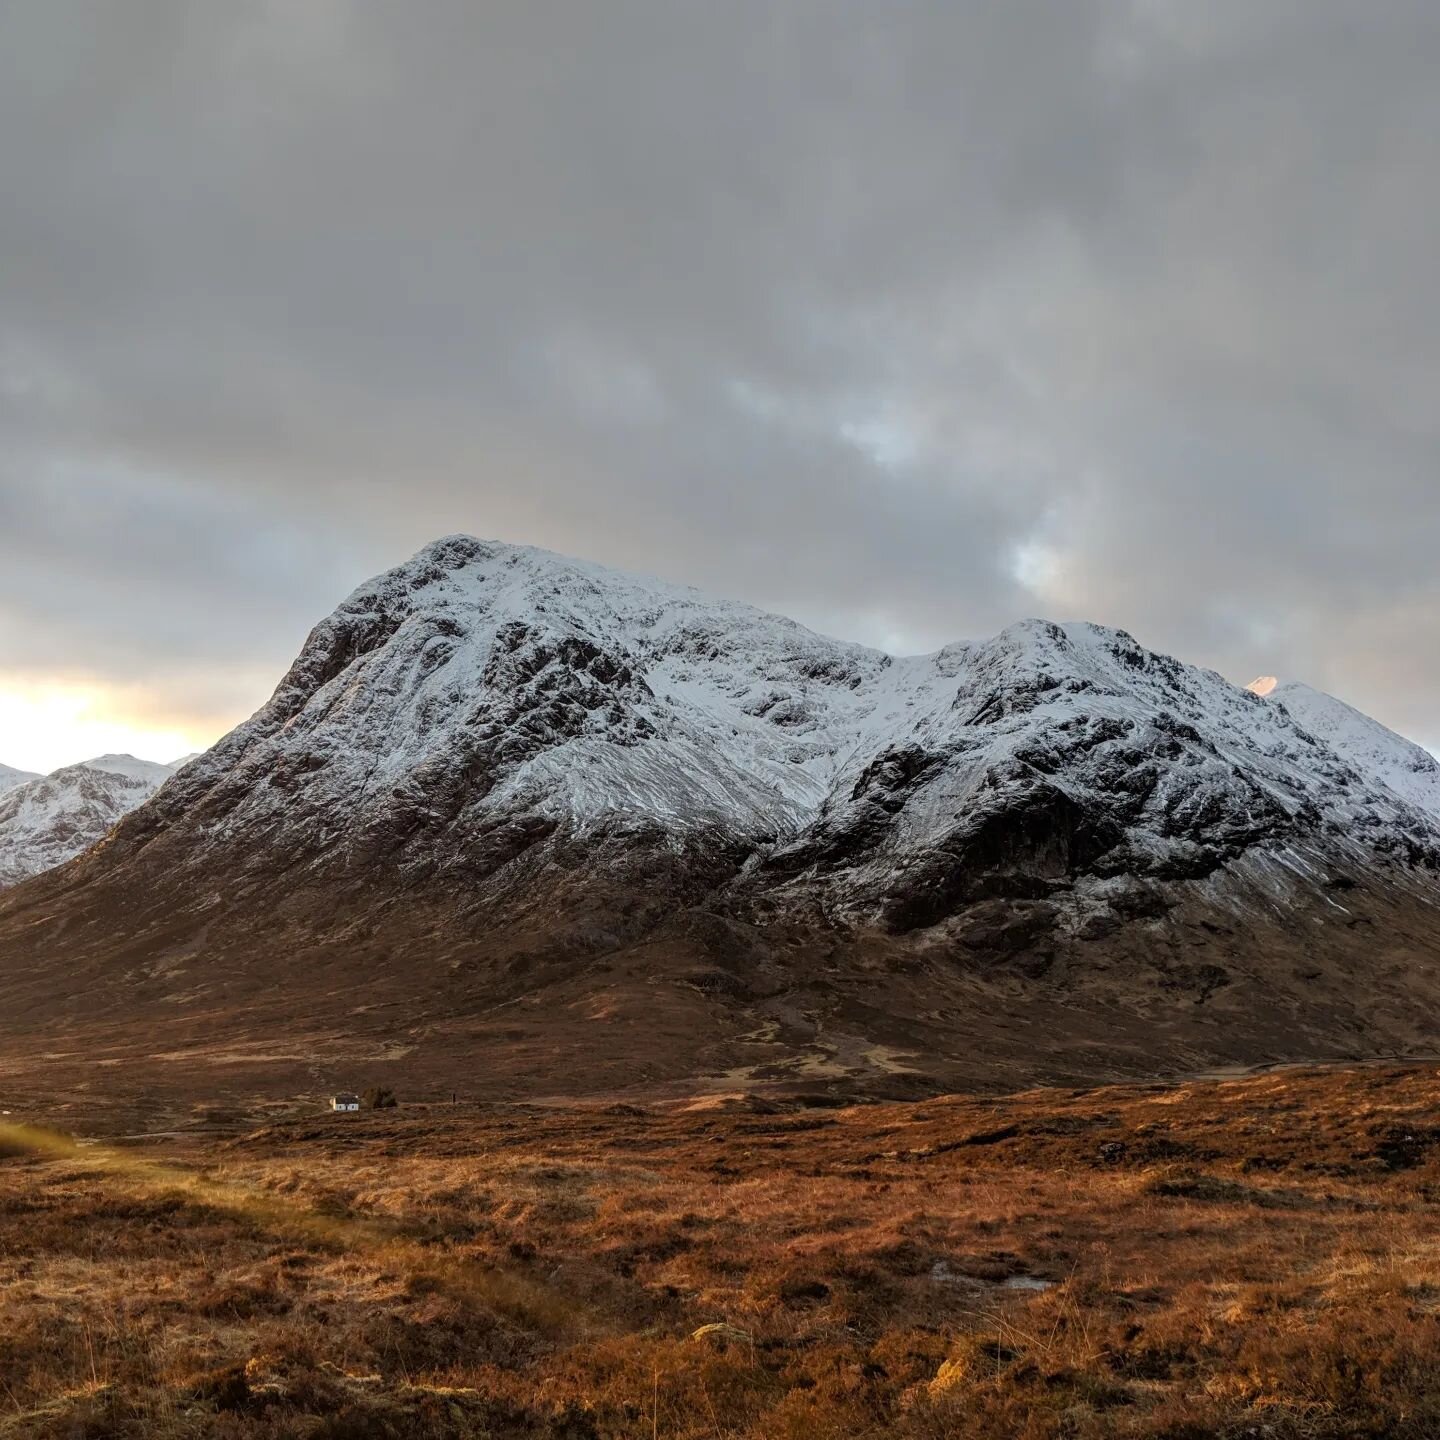 Always a favourite - plan this year is to climb it. 

#glencoe #scottishhighlands #Scotland #schottland #beautifulscotland #explore_scotland #fortheloveofscotland #instascotland